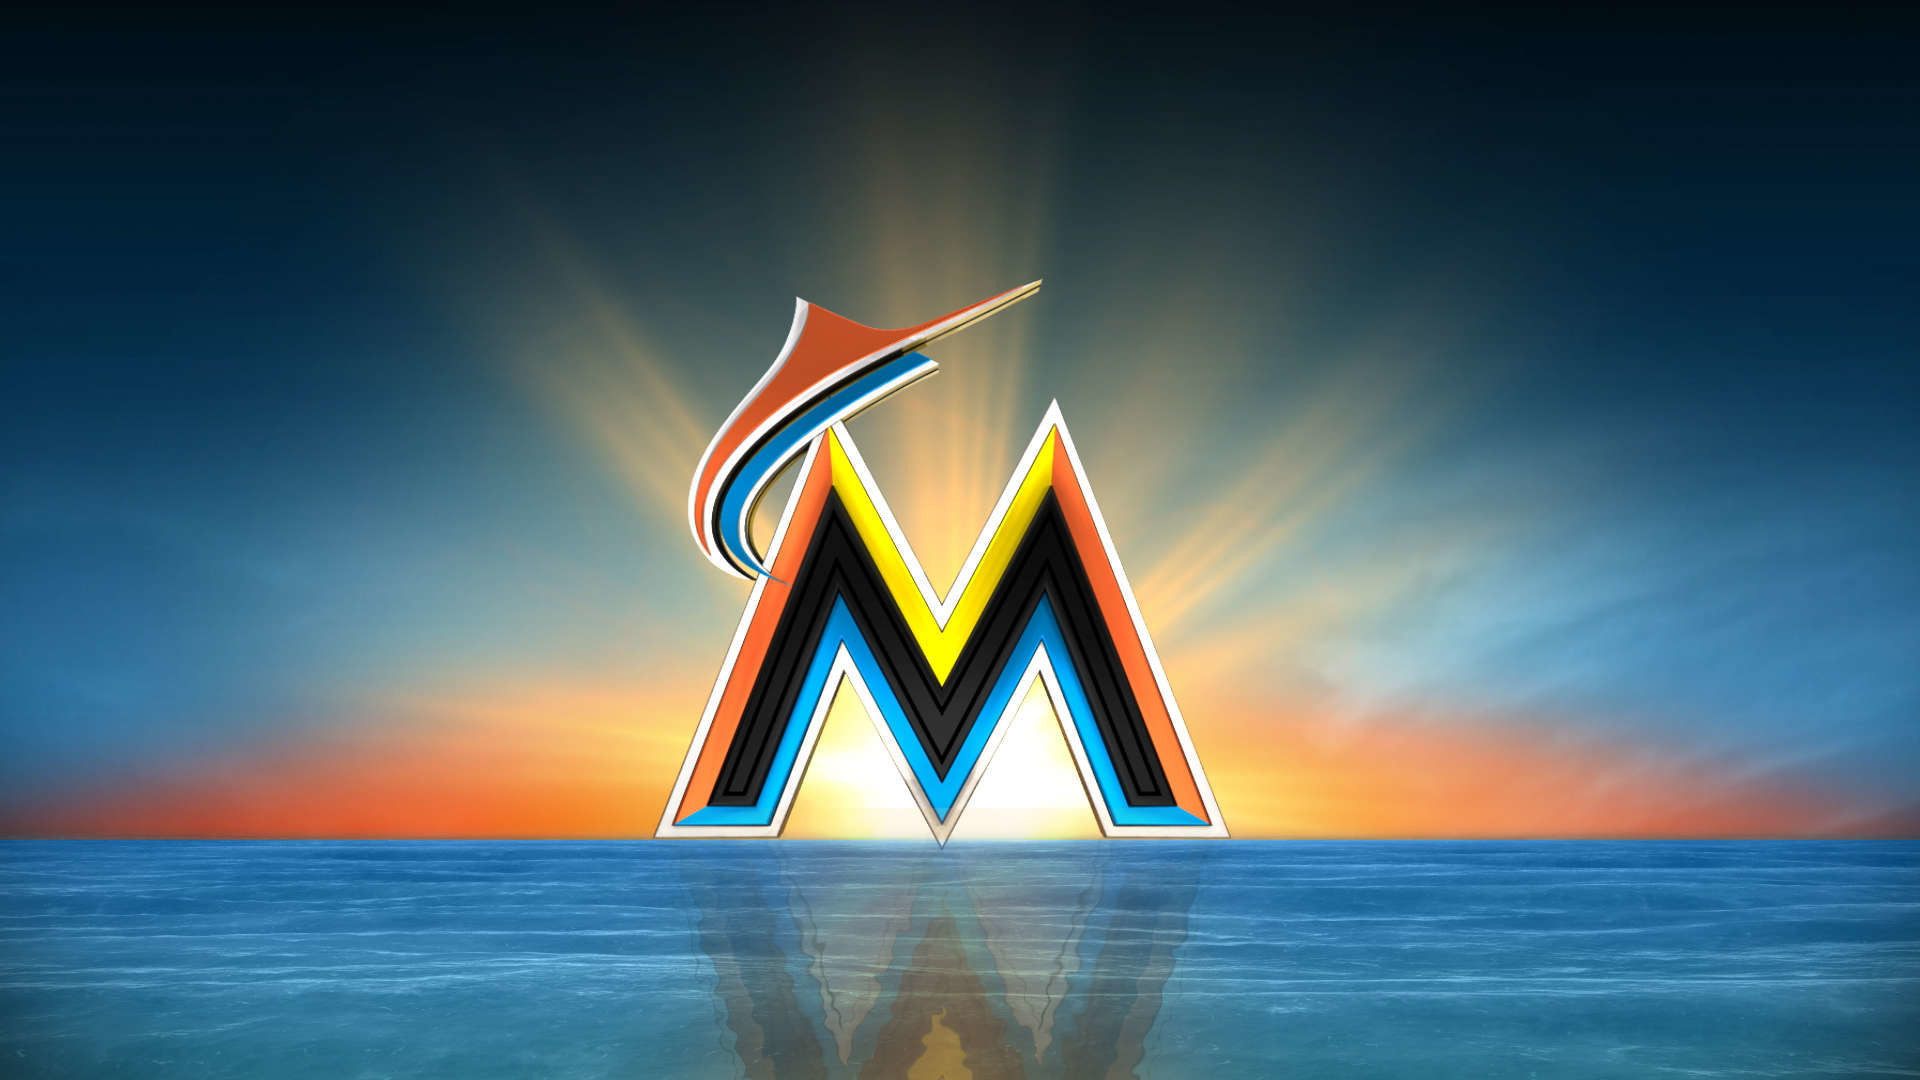 1920x1080 Download now: Miami Marlins Logo HD Wallpaper. Read description info's .